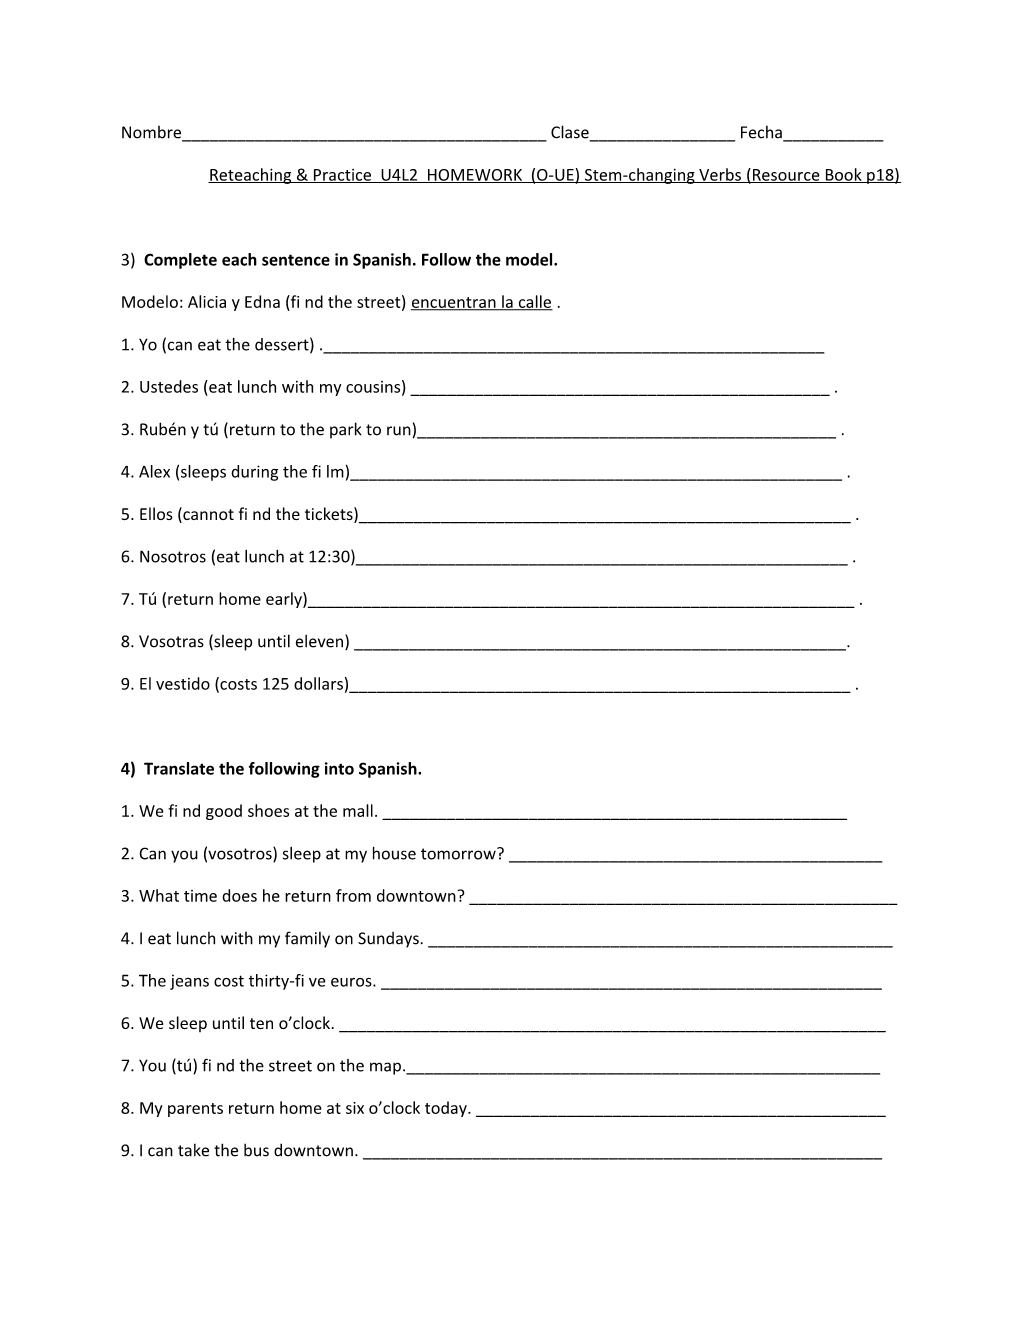 Reteaching & Practice U4L2 HOMEWORK (O-UE) Stem-Changing Verbs (Resource Book P18)